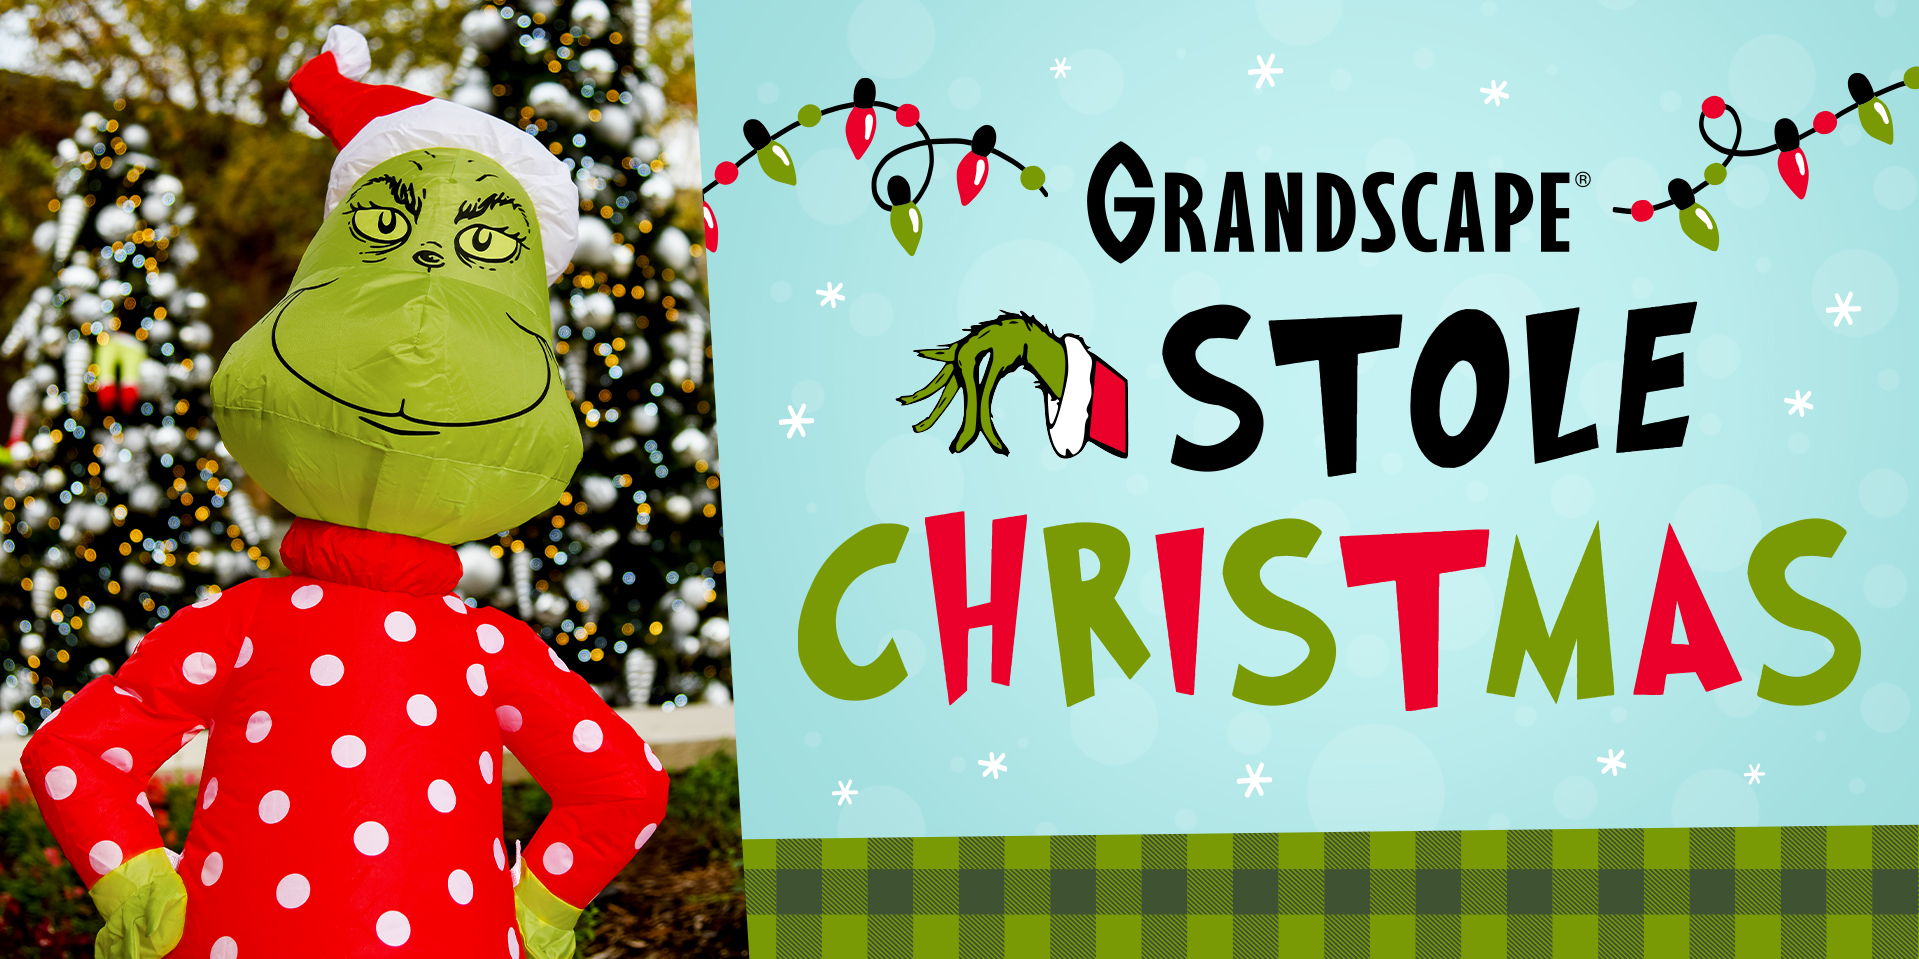 Grandscape Stole Christmas promotional image